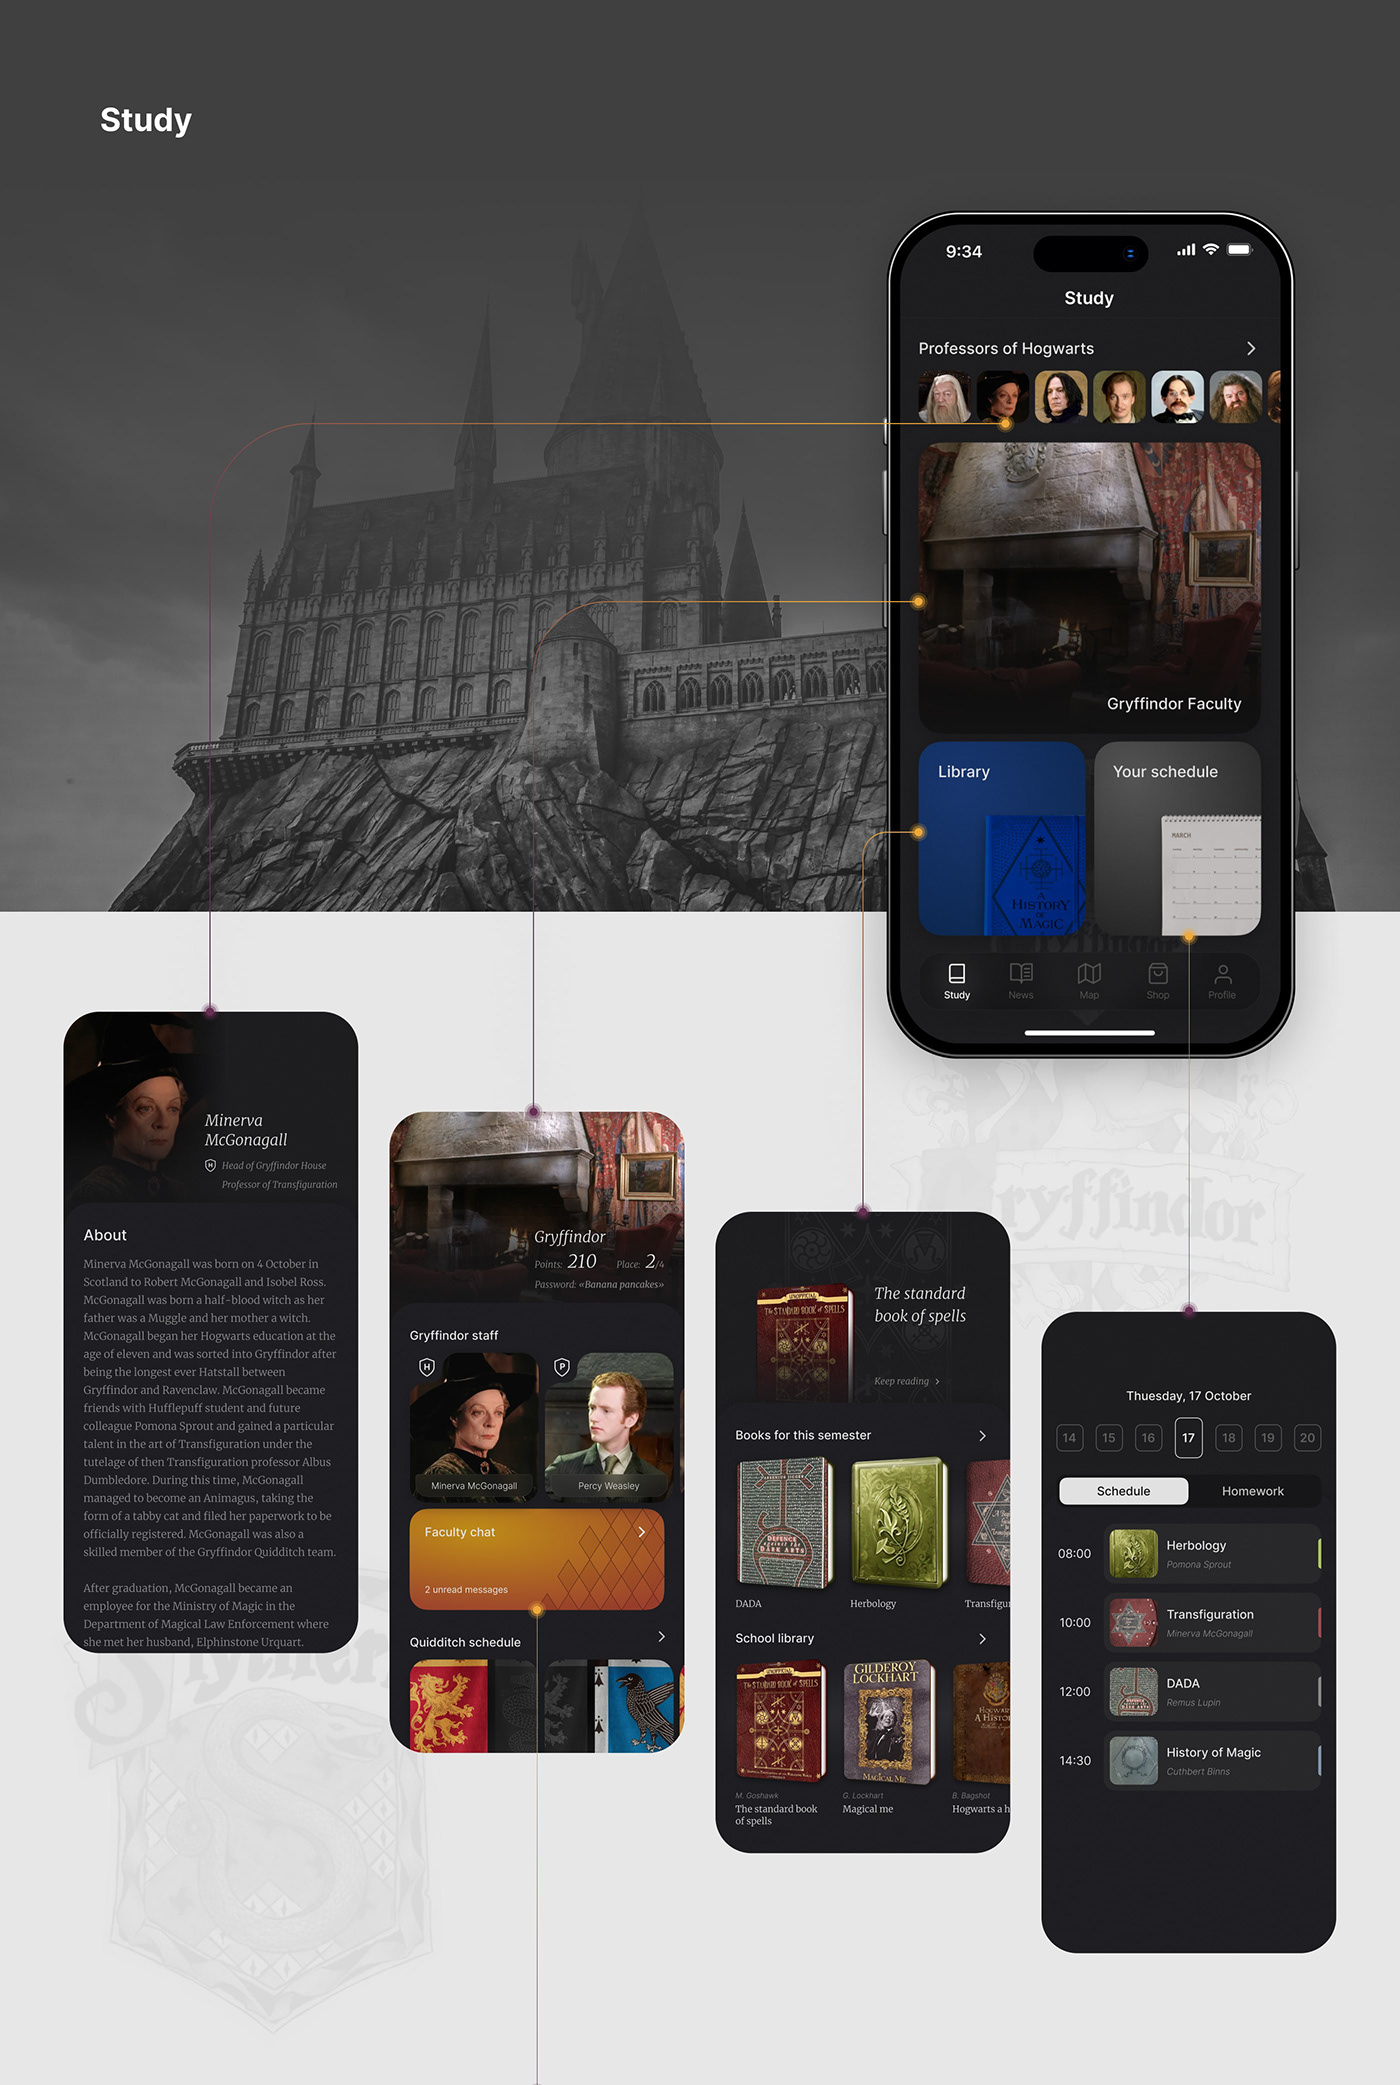 Main screen of mobile application "Hogwarts"